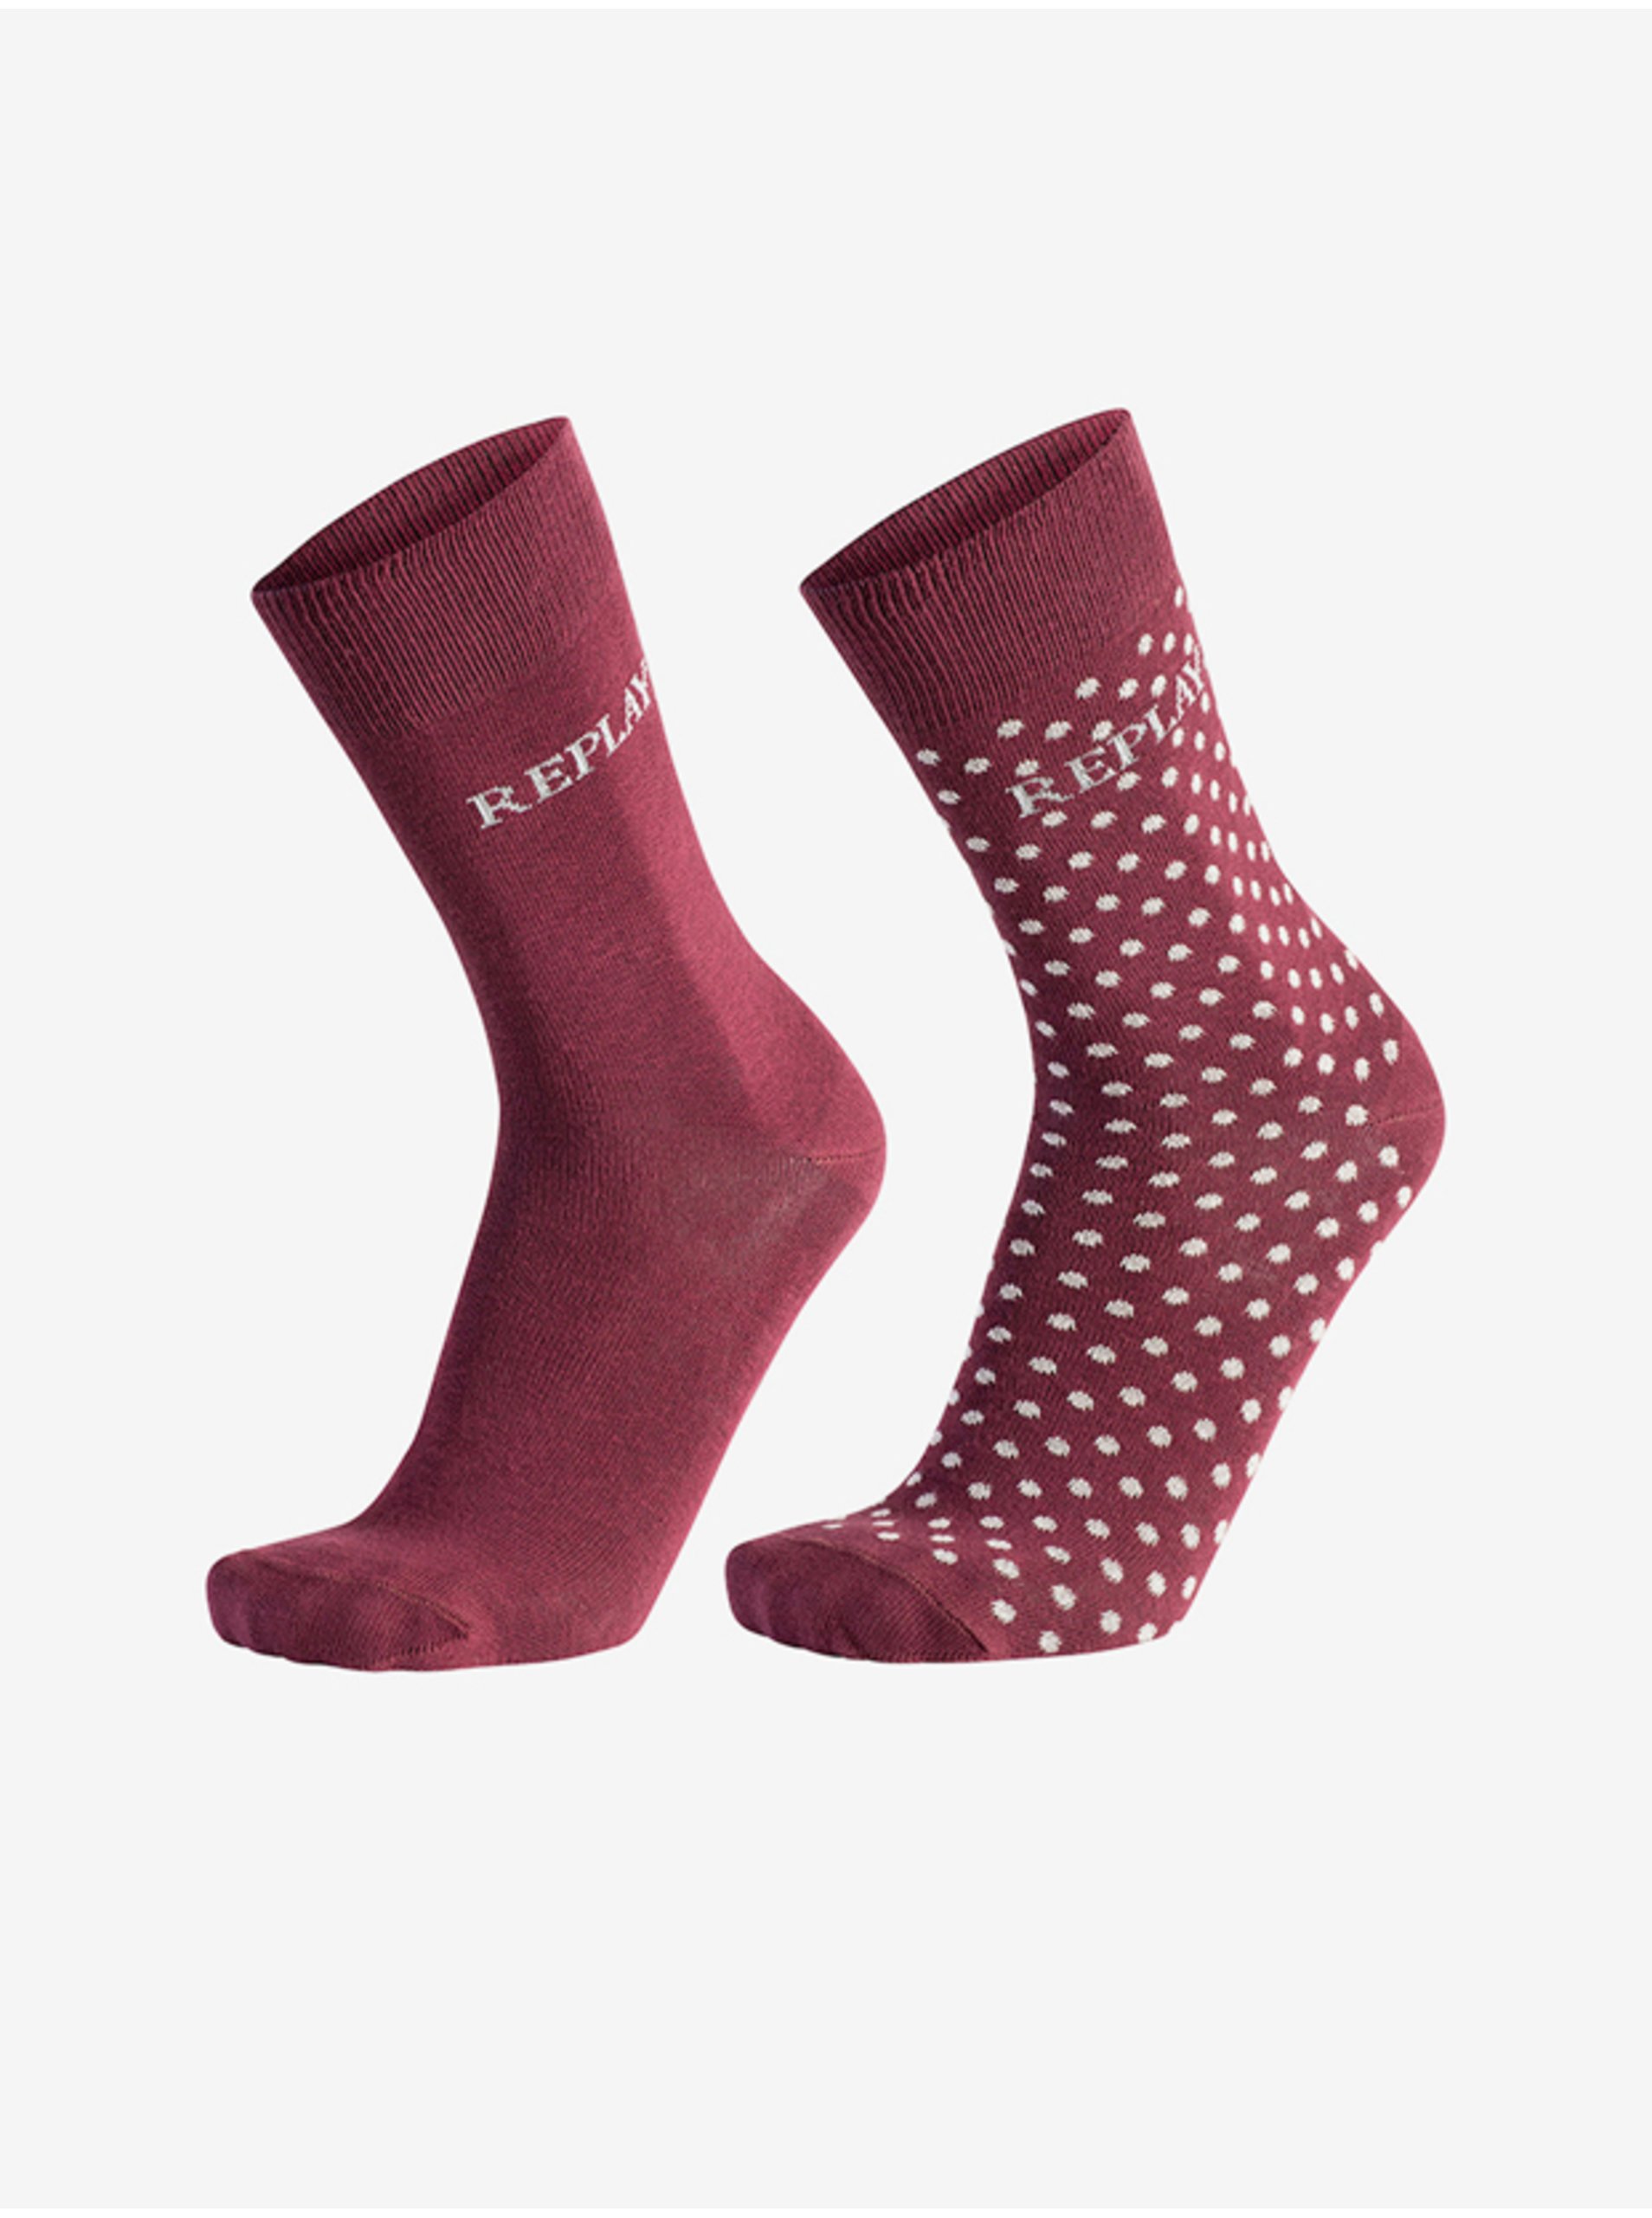 Set of two pairs of socks in replay burgundy - Men